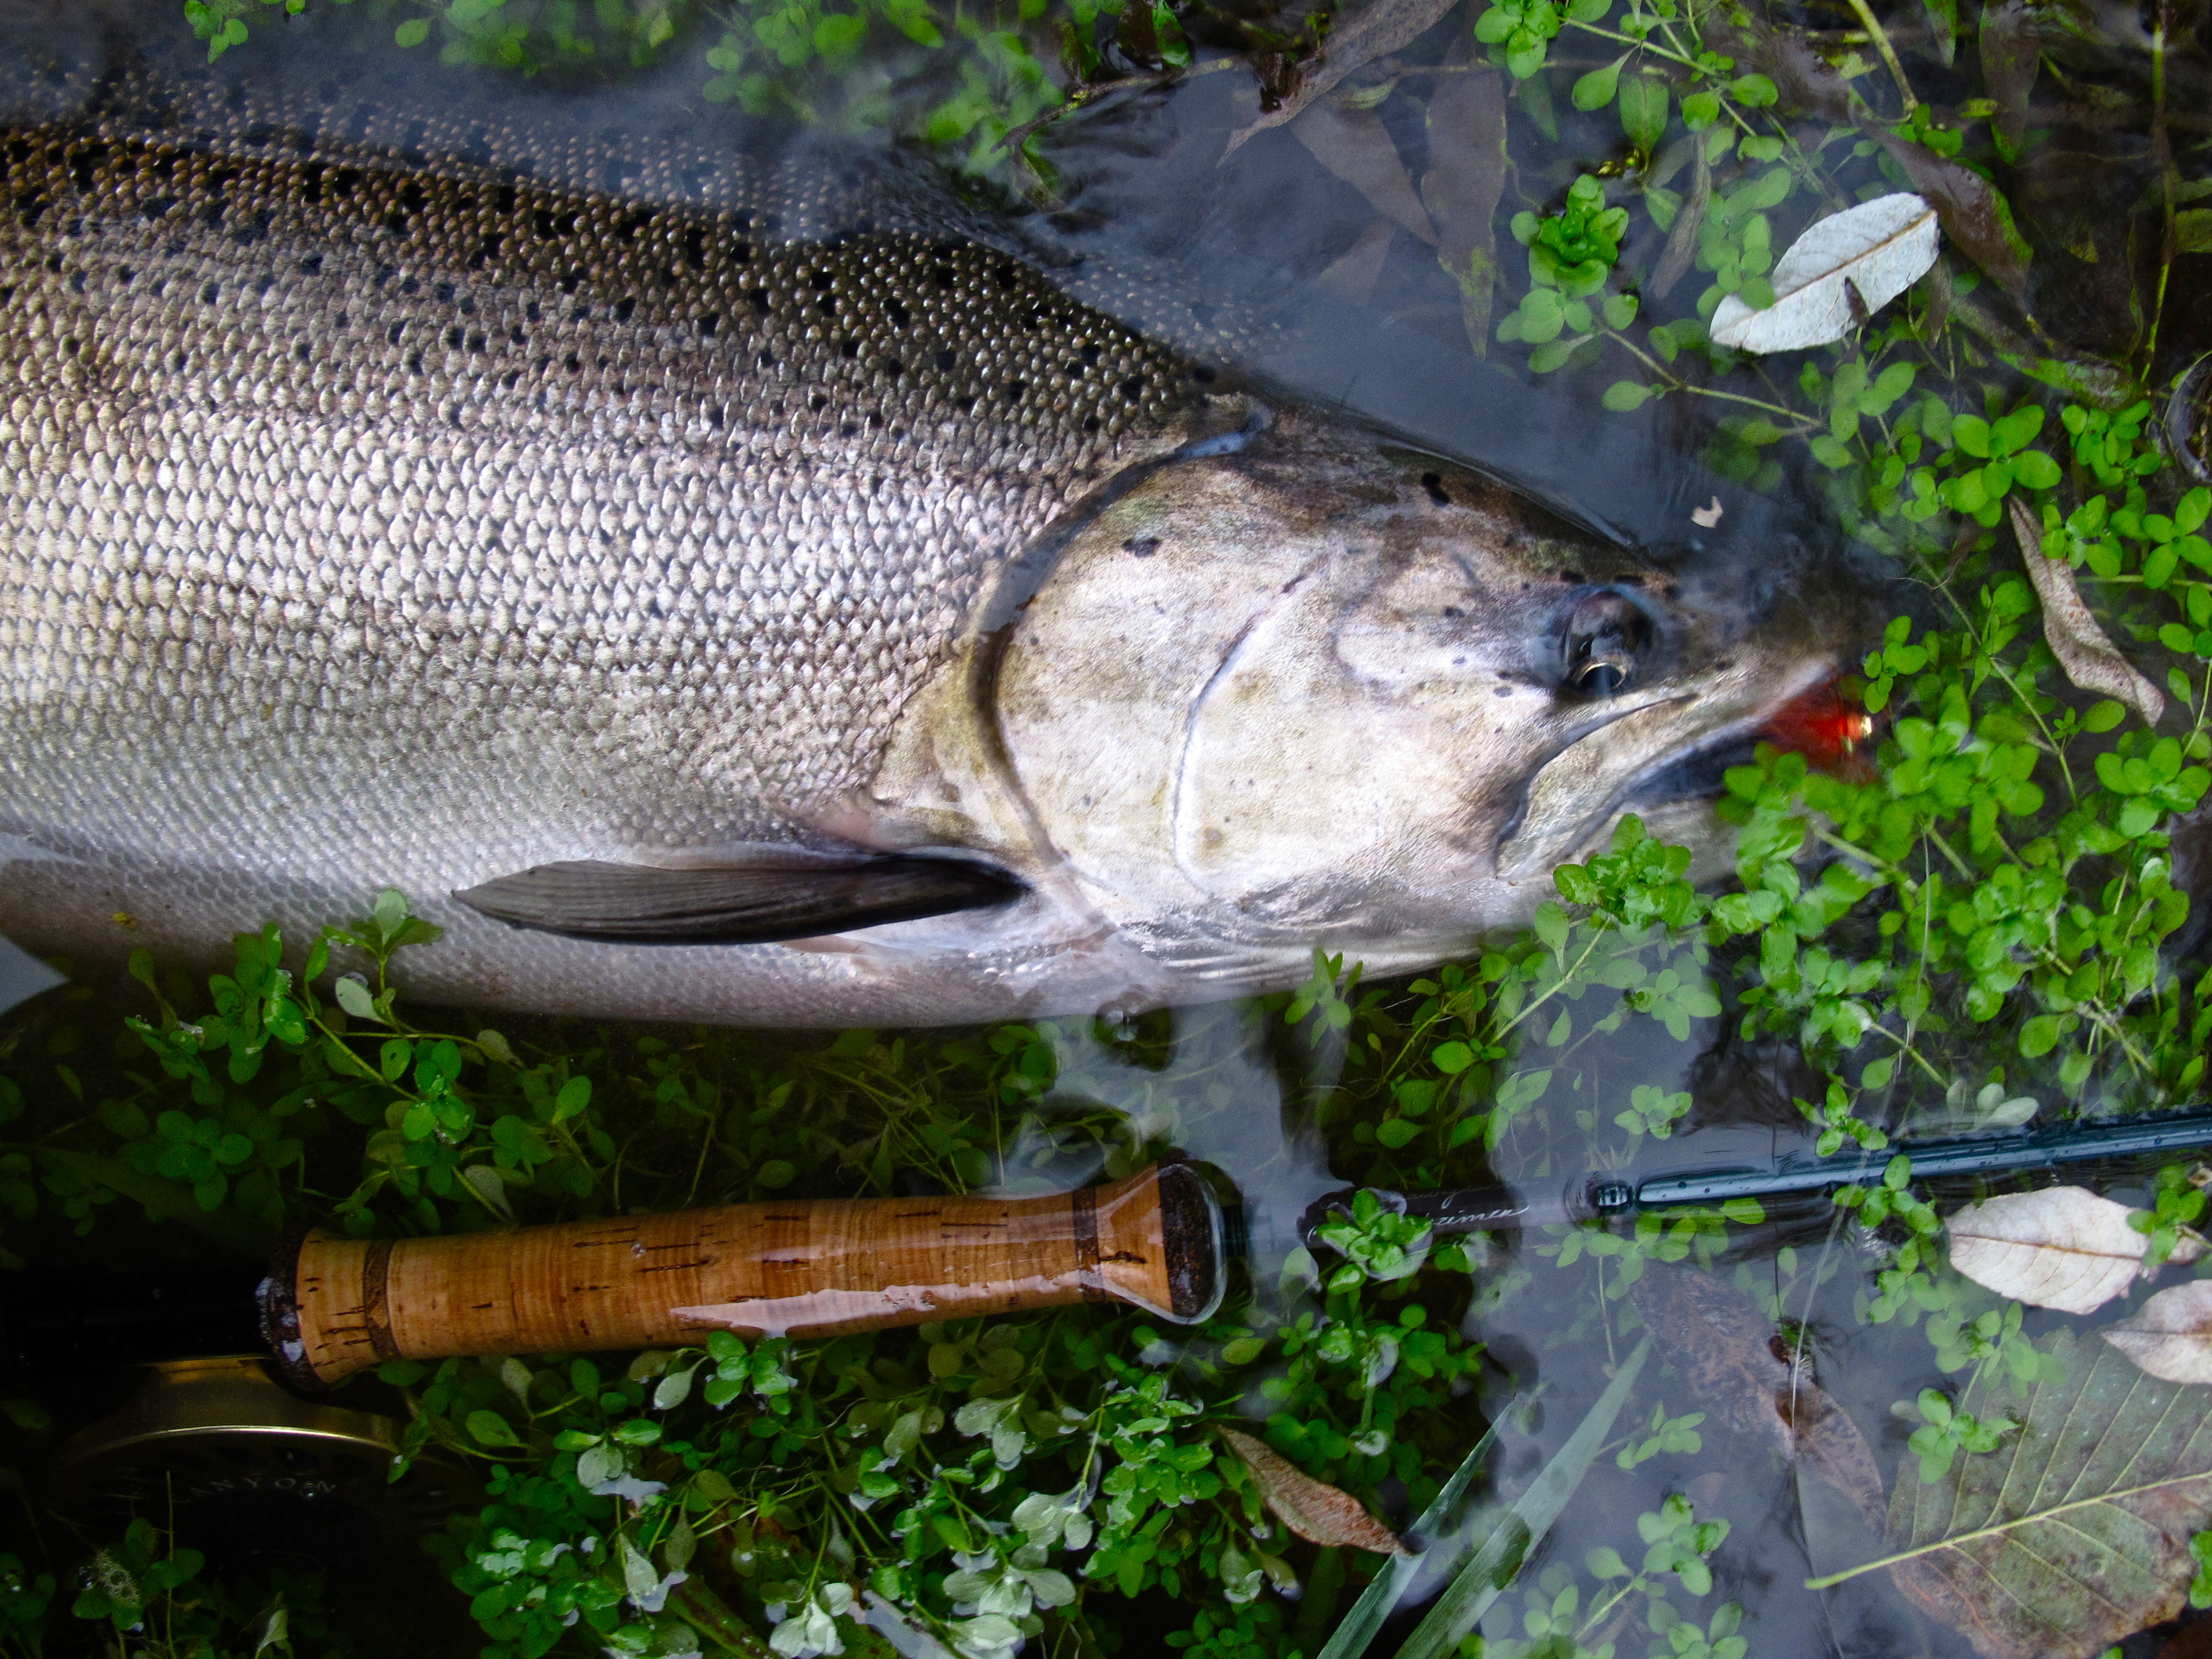 https://oregonflyfishingblog.com/wp-content/uploads/2011/11/Jay-Nicholas-Caddis-Fly-Shop-Salmon-Fly-Fishing-Tackle-7.jpg